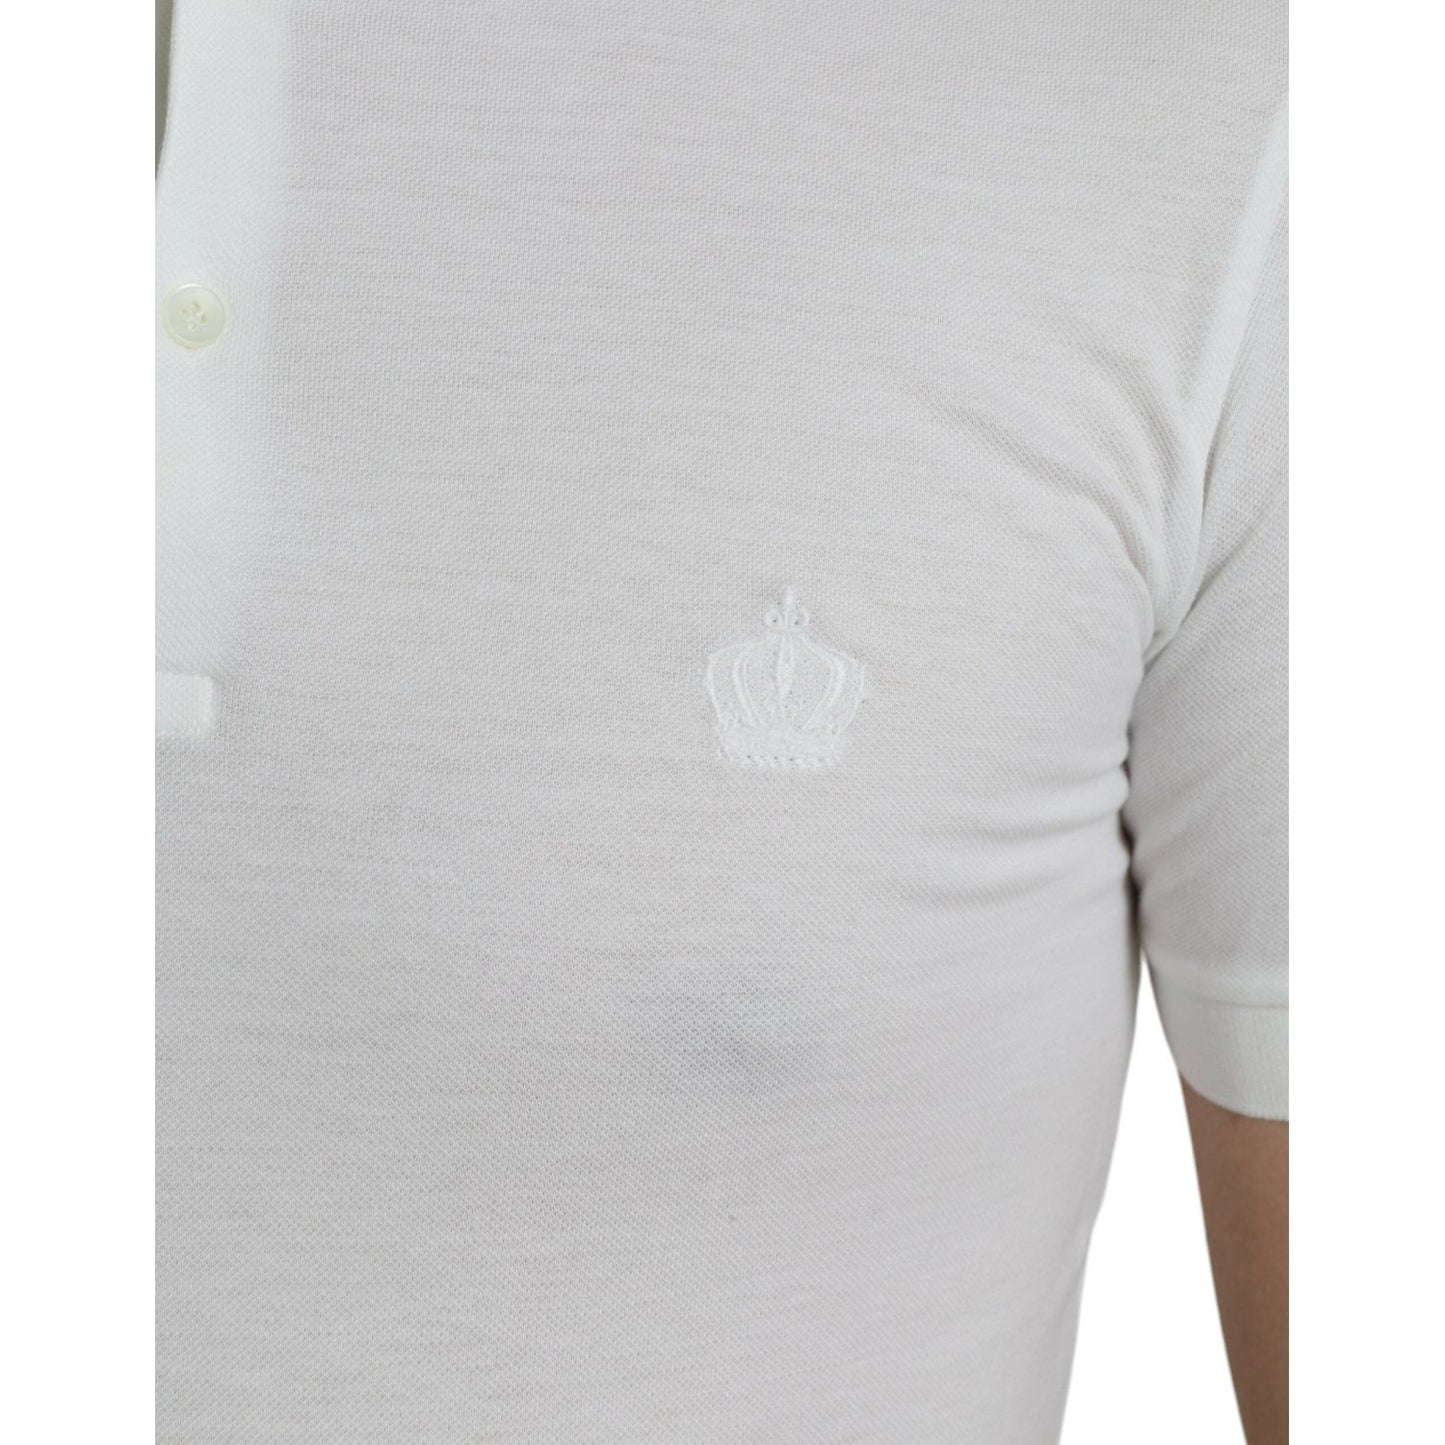 Dolce & Gabbana Crown Embroidered White Cotton Polo crown-embroidered-white-cotton-polo